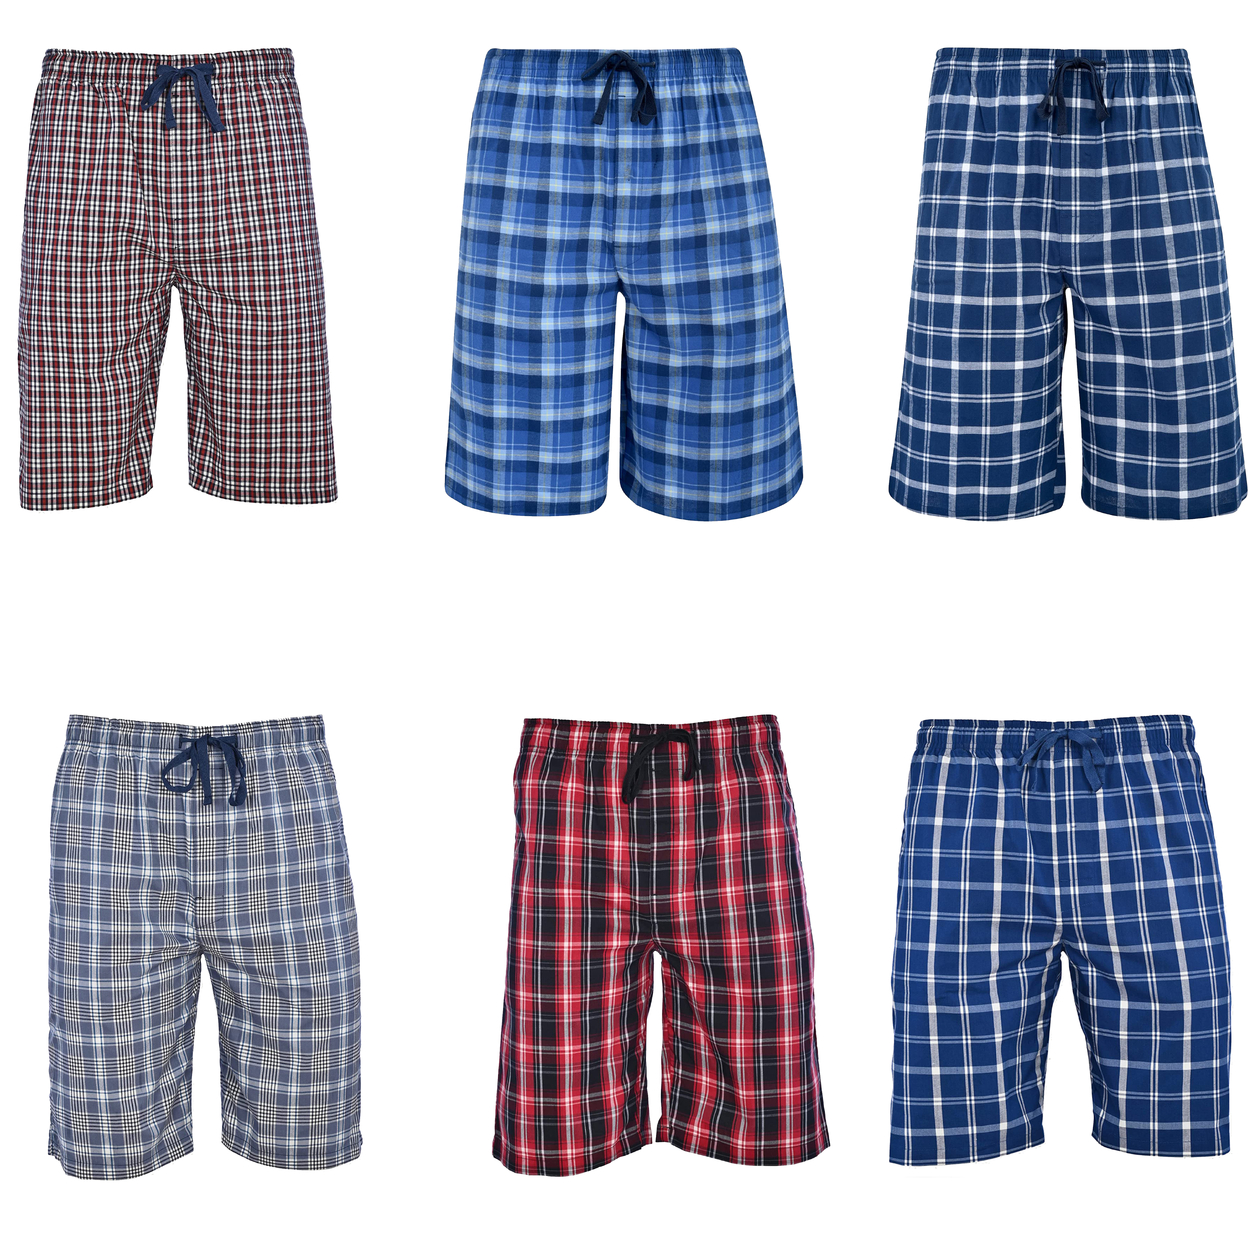 2-Pack: Men's Ultra Soft Plaid Lounge Pajama Sleep Wear Shorts - Black & Blue, Medium